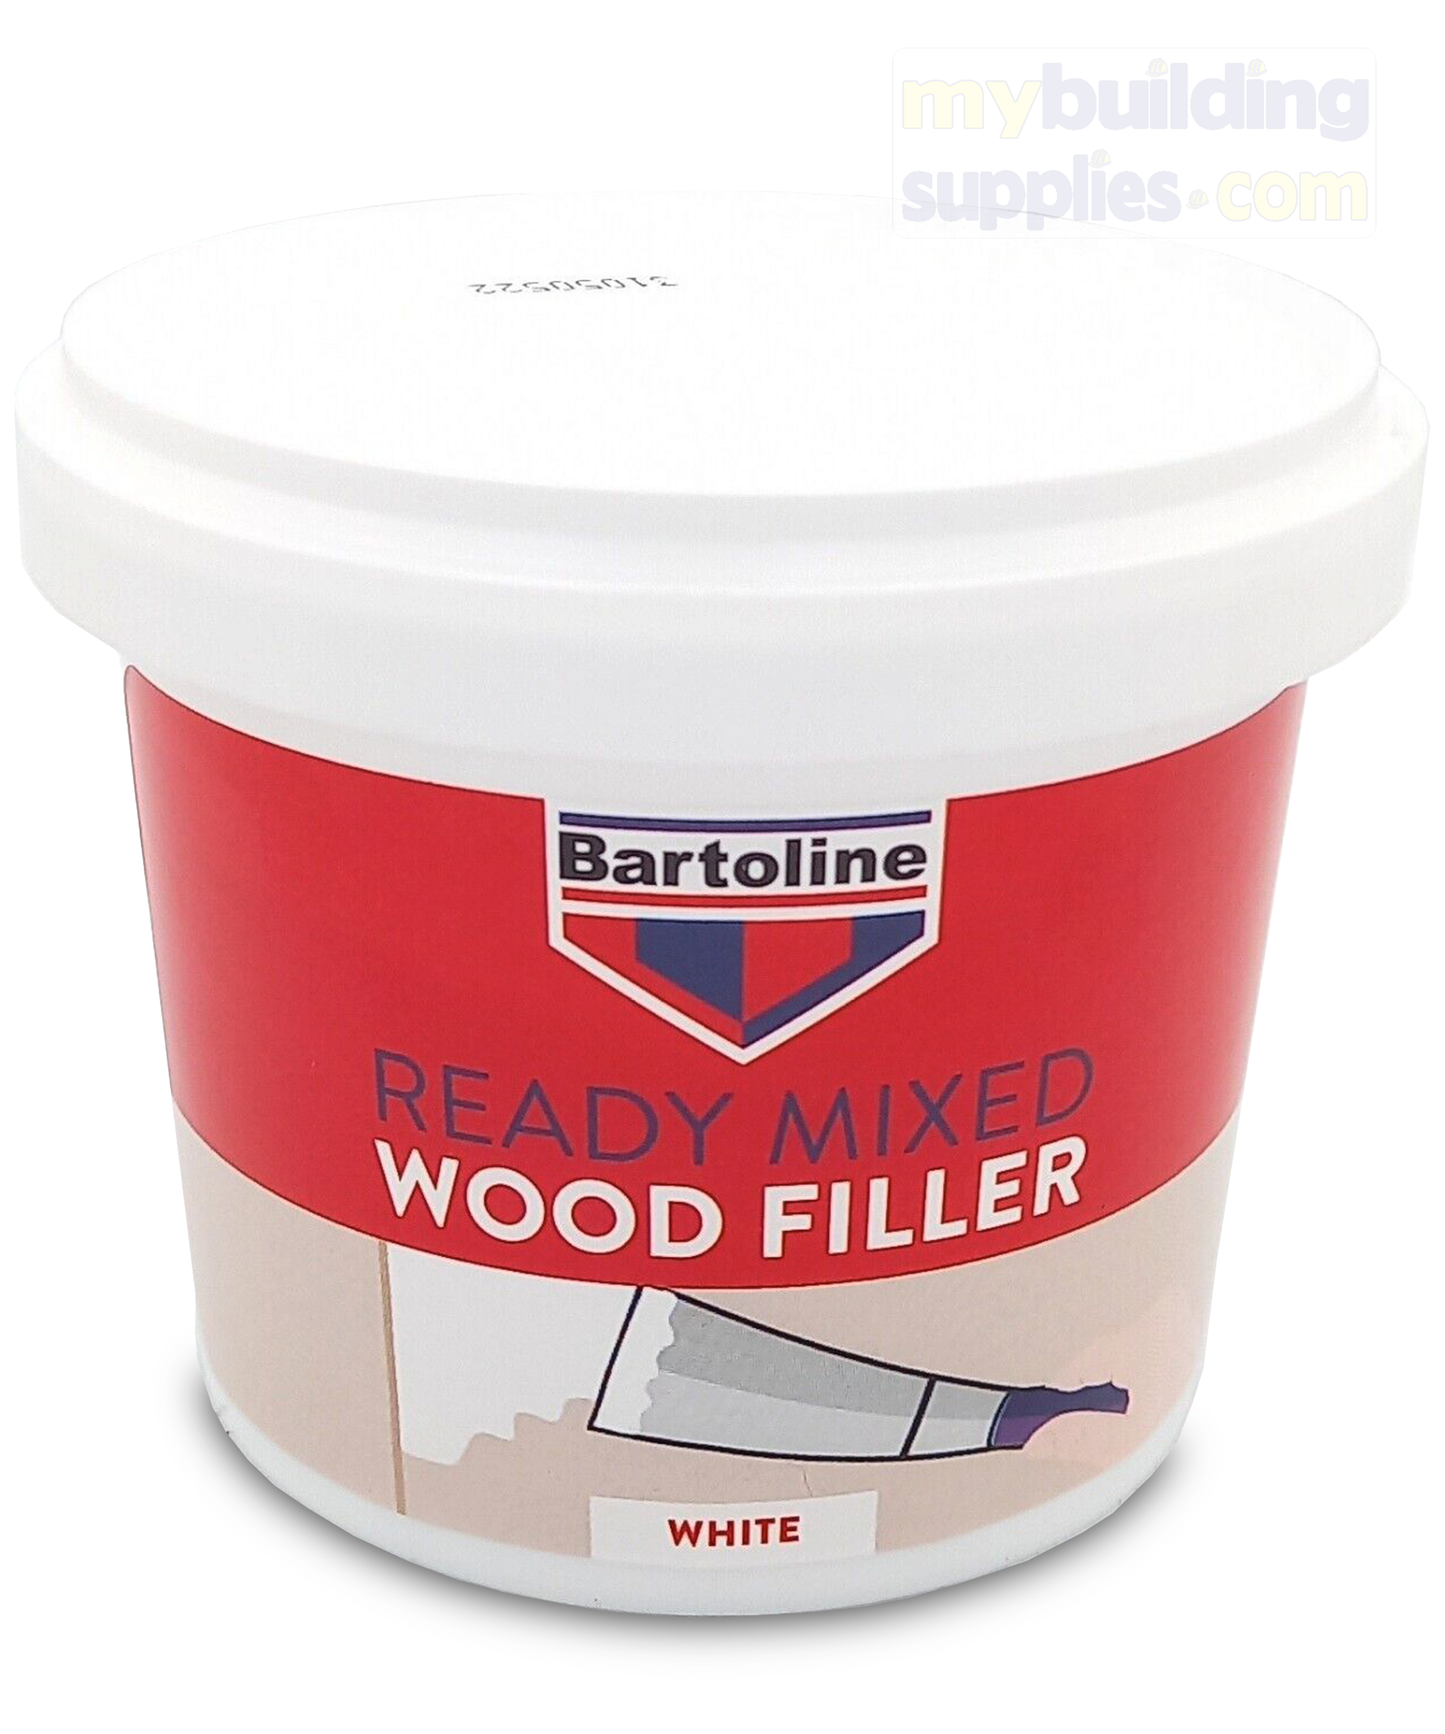 Bartoline Ready Mixed Wood Filler - White, 500g